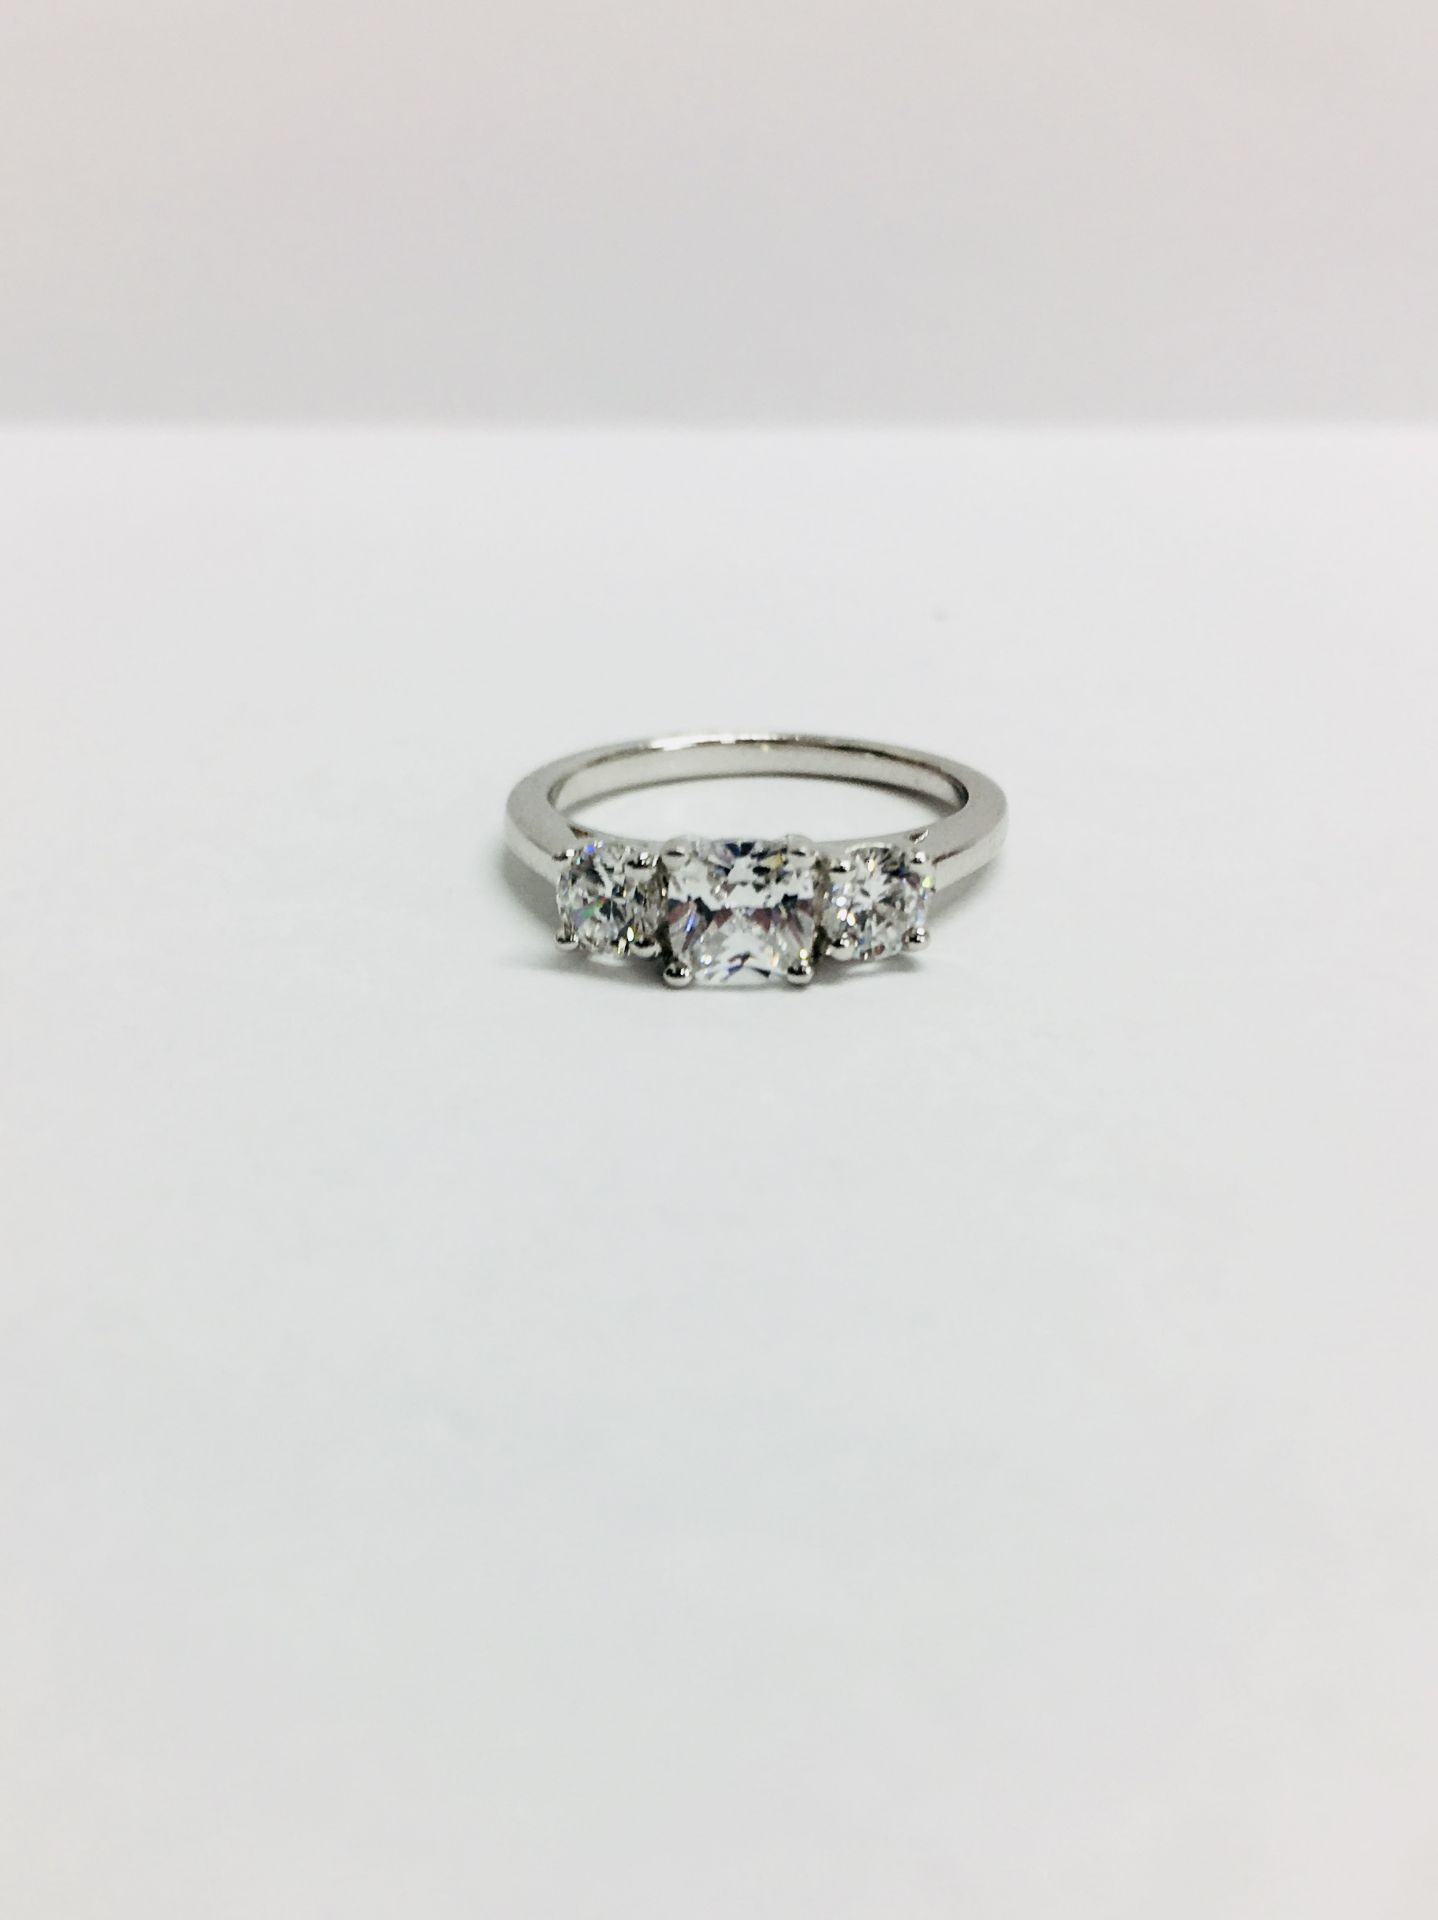 Platinum diamond three stone ring,centre stone 1ct cushion h colour vs clarity,excellent ut and